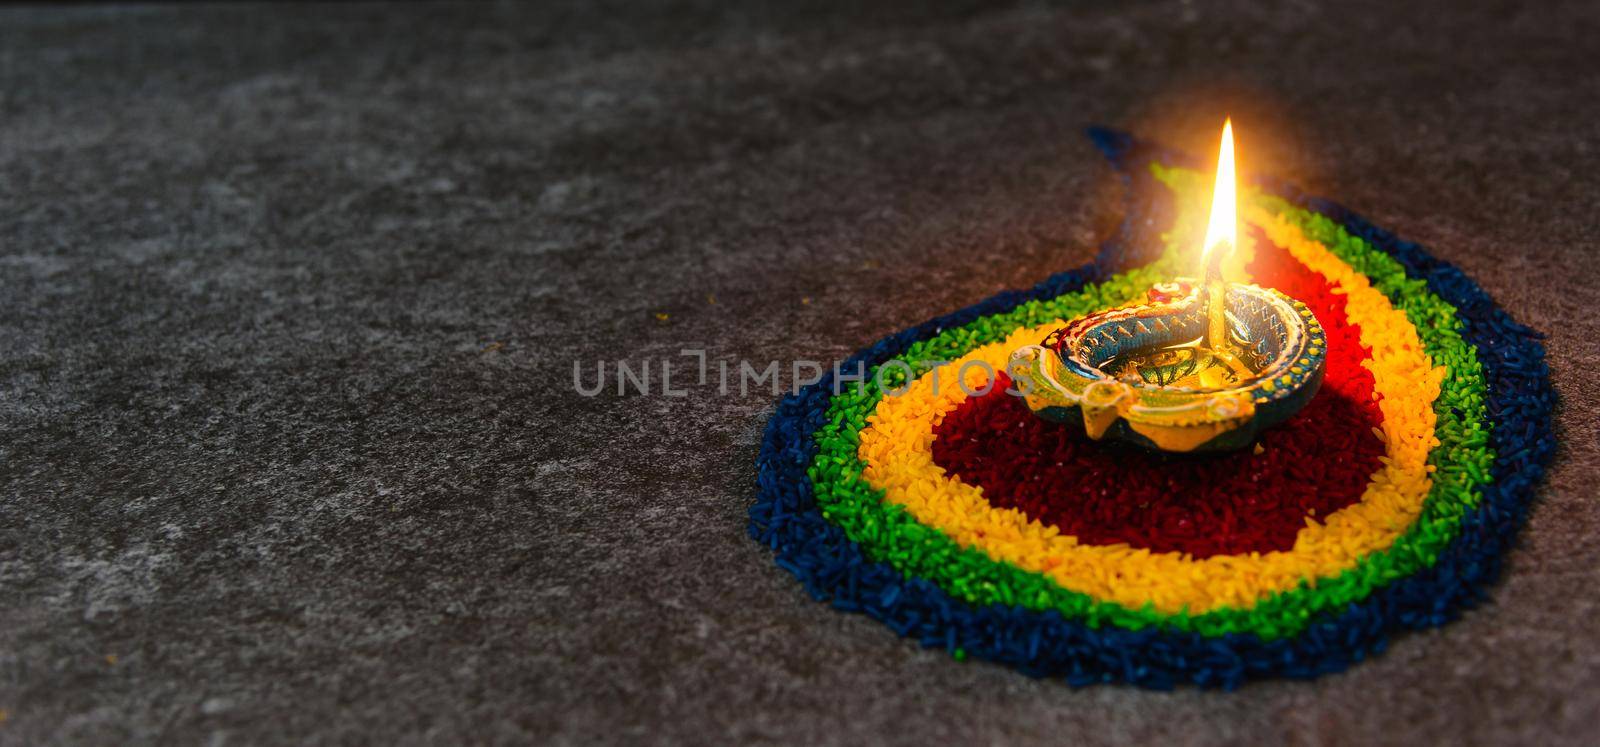 Happy celebration Deepavali, or Diwali Indian festival by Sorapop